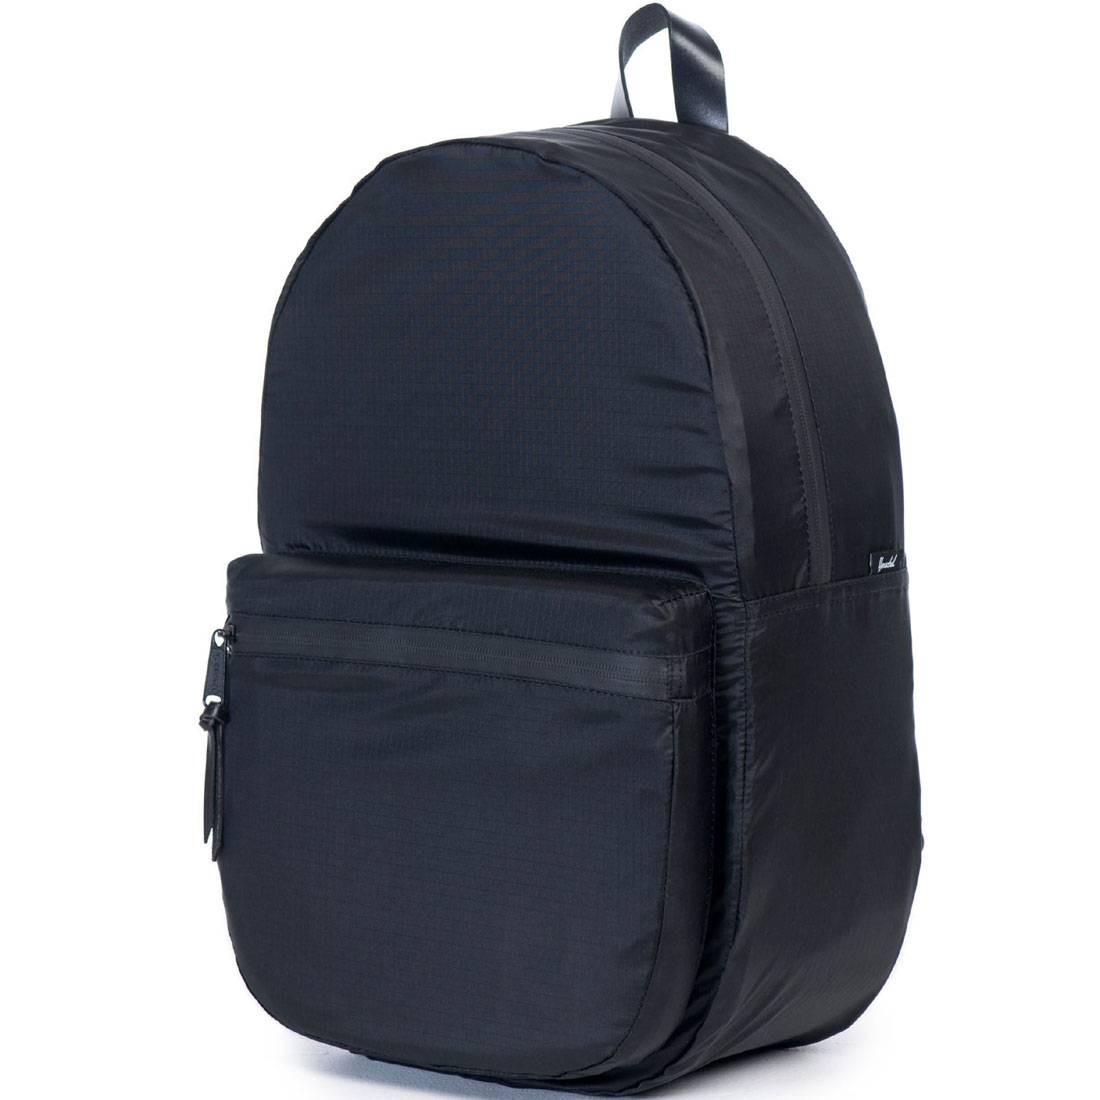 Herschel Supply Co Lawson Backpack - Sealtech (black)